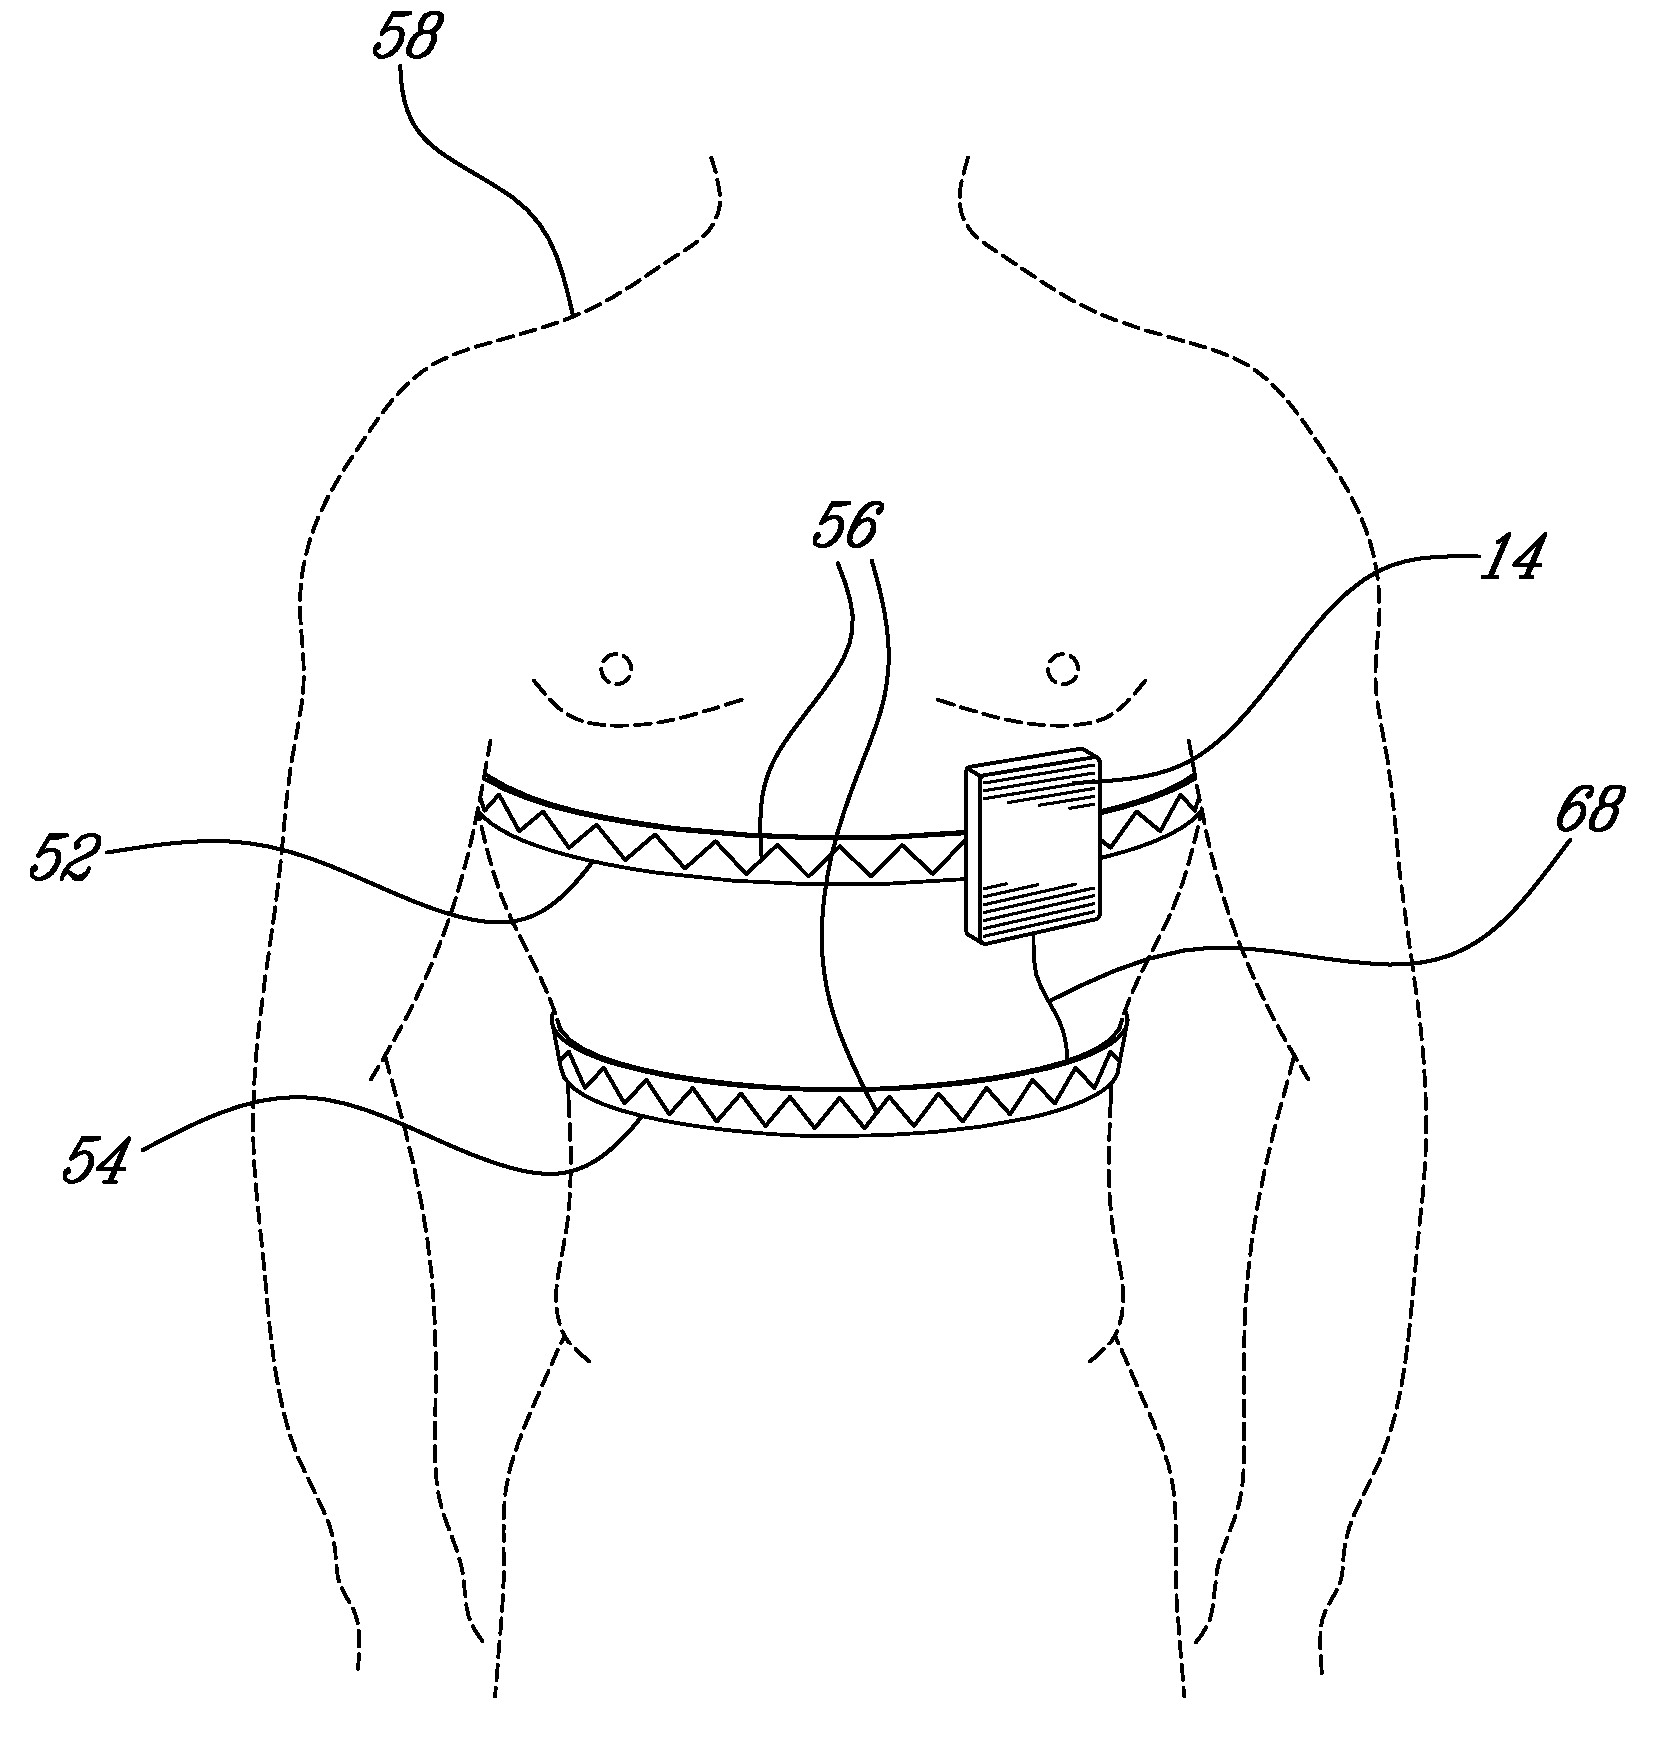 Physiologic sensor apparatus